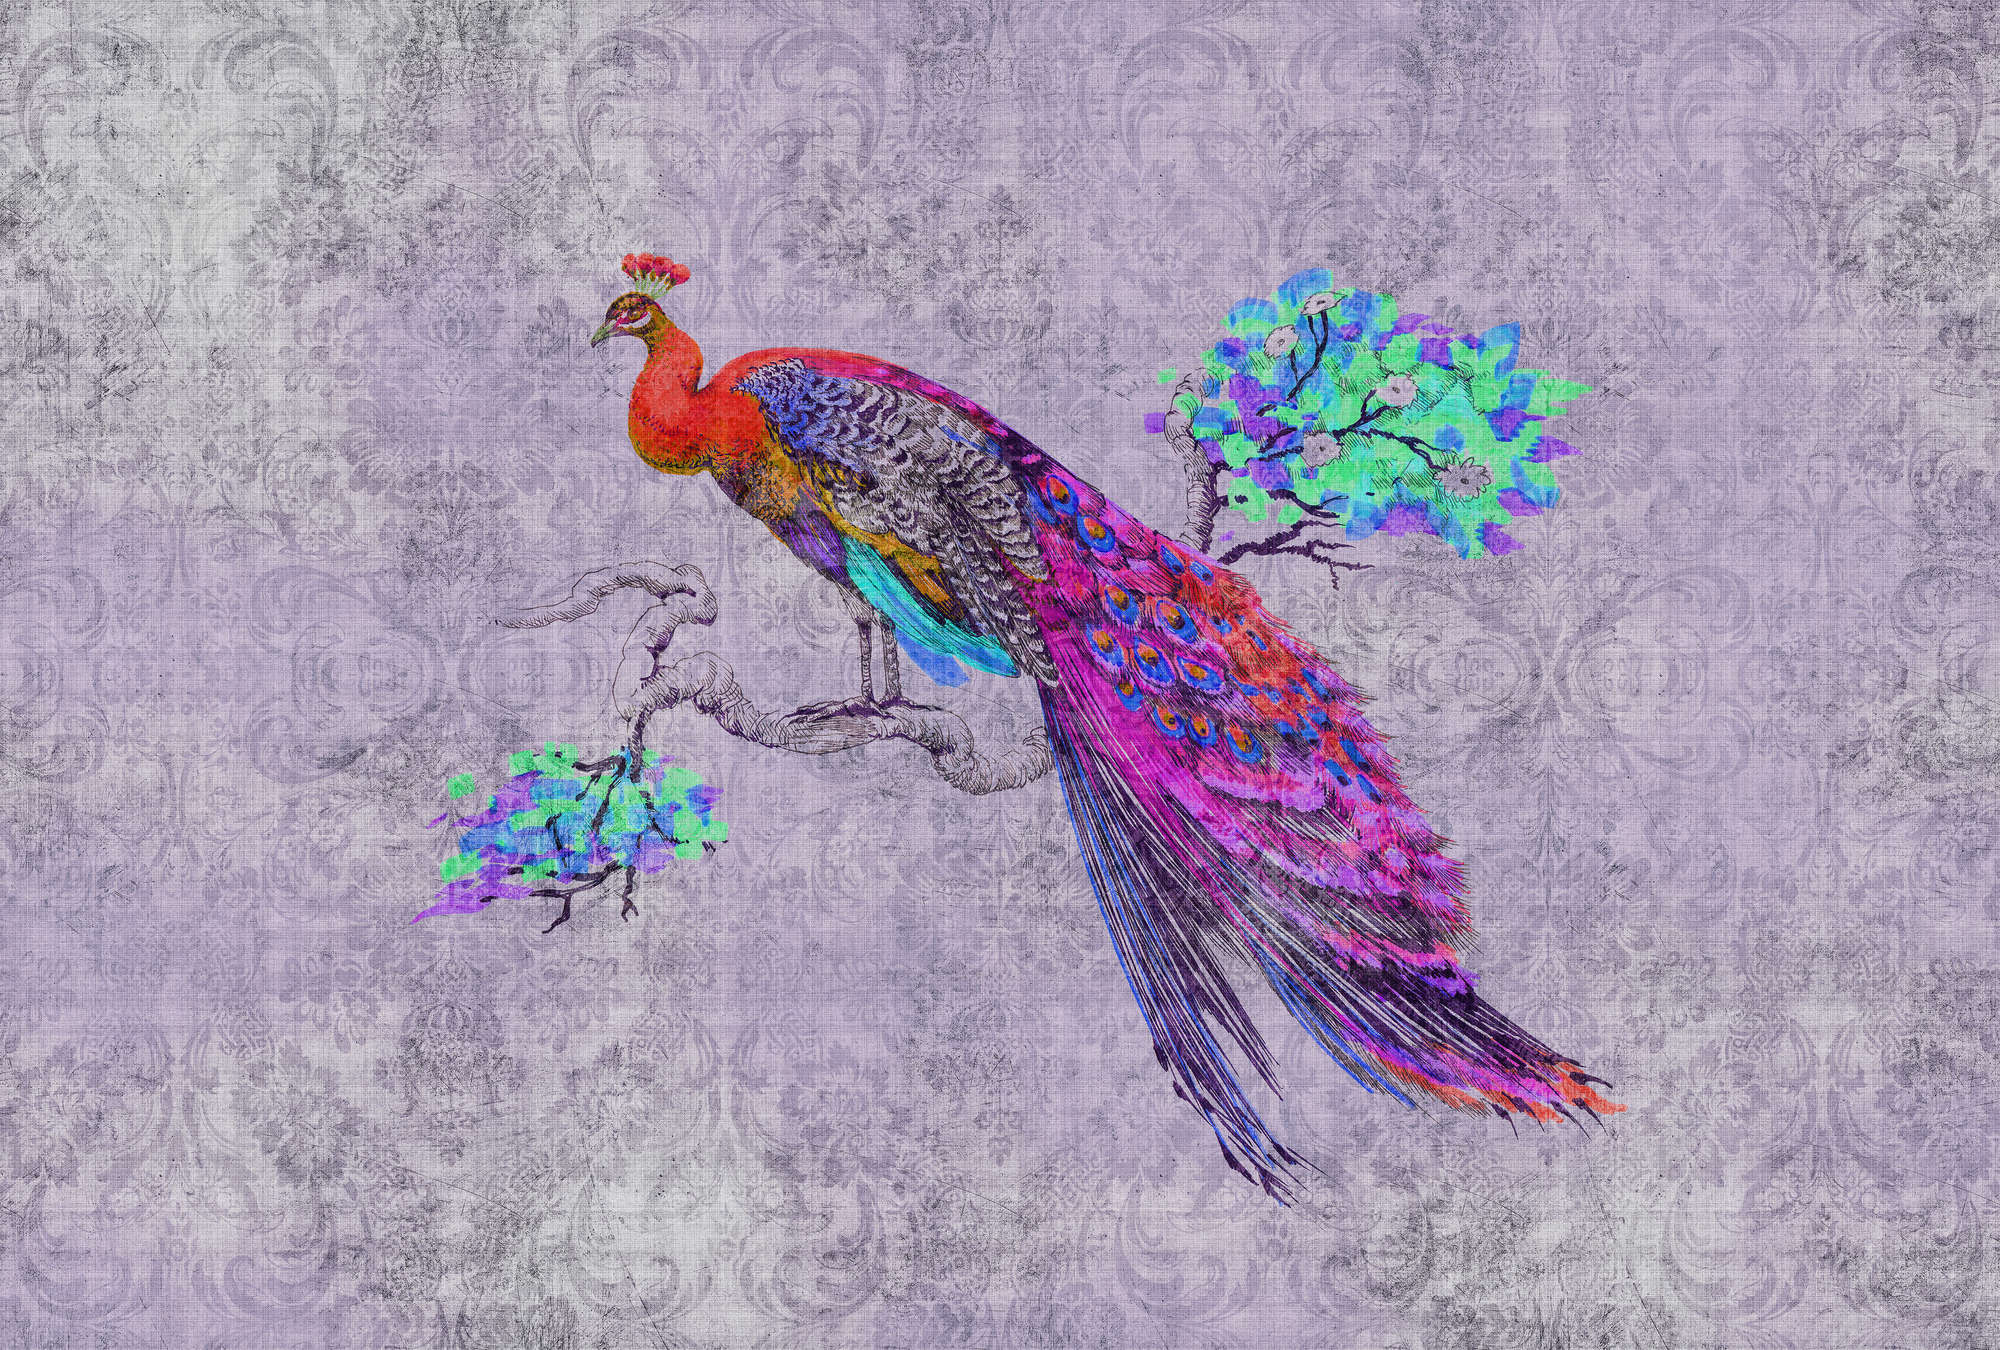             Peacock 3 - Colourful Peacock Wallpaper - Nature Linen Texture - Blue, Pink | Structure Non-woven
        